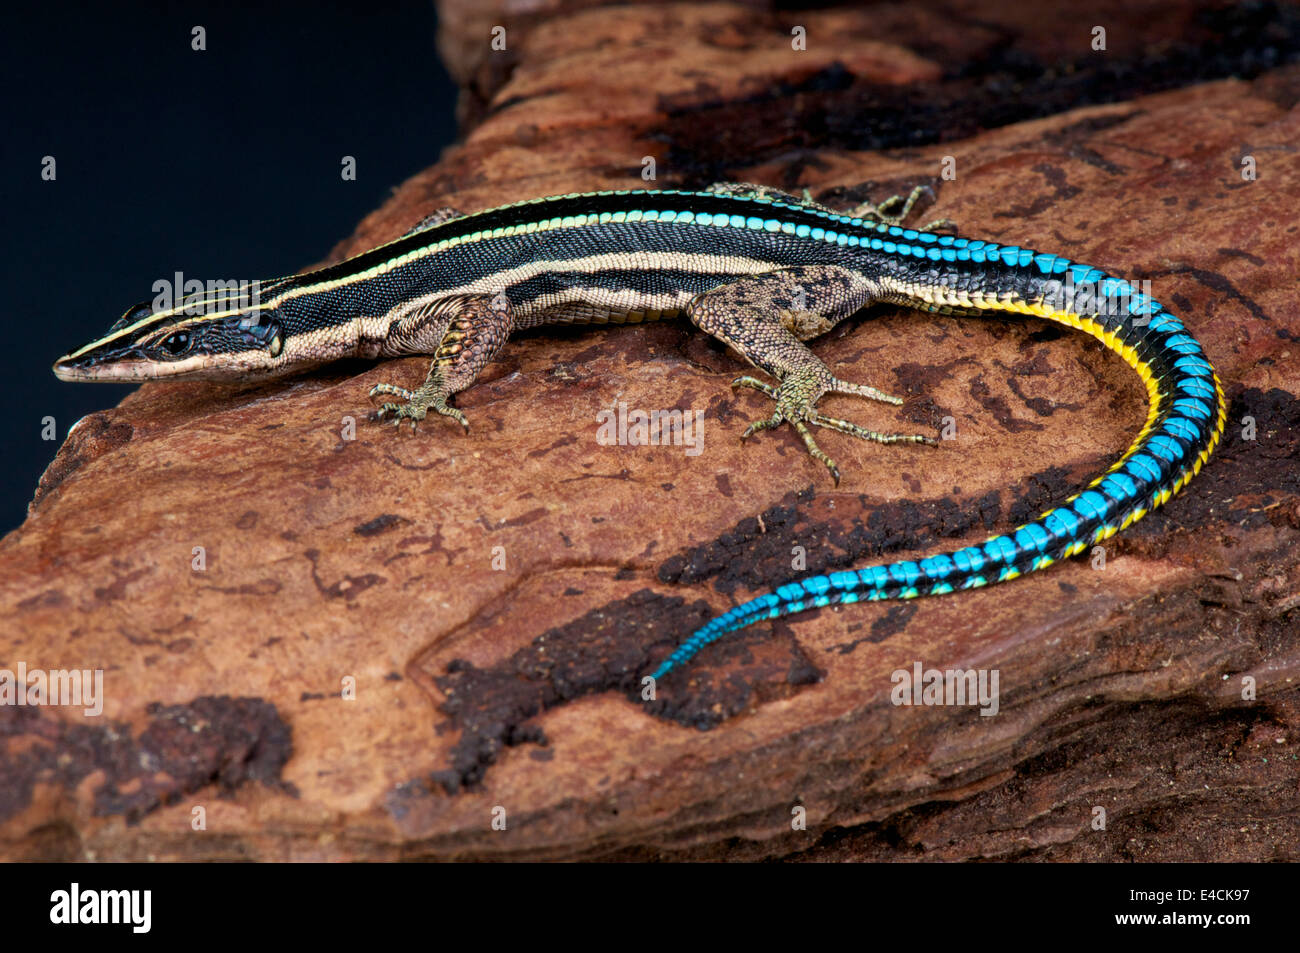 Blue tailed tree lizard / Holaspis guentheri Stock Photo